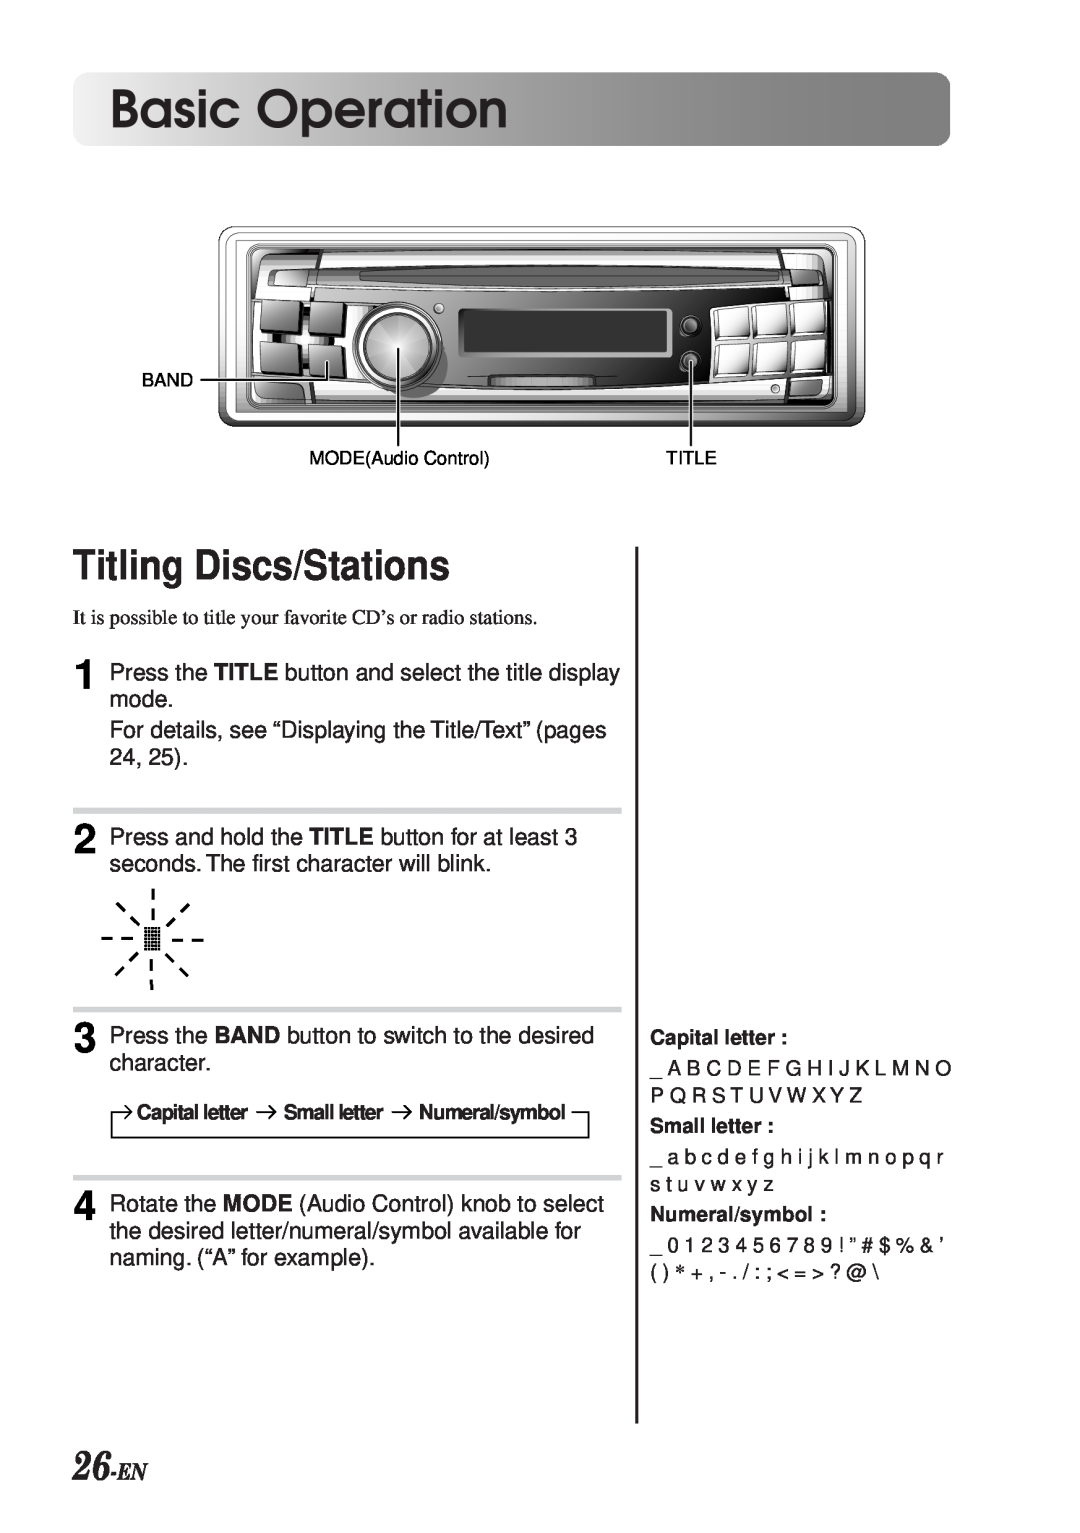 Alpine CDA-7990 manual Titling Discs/Stations, 26-EN, Basic Operation 